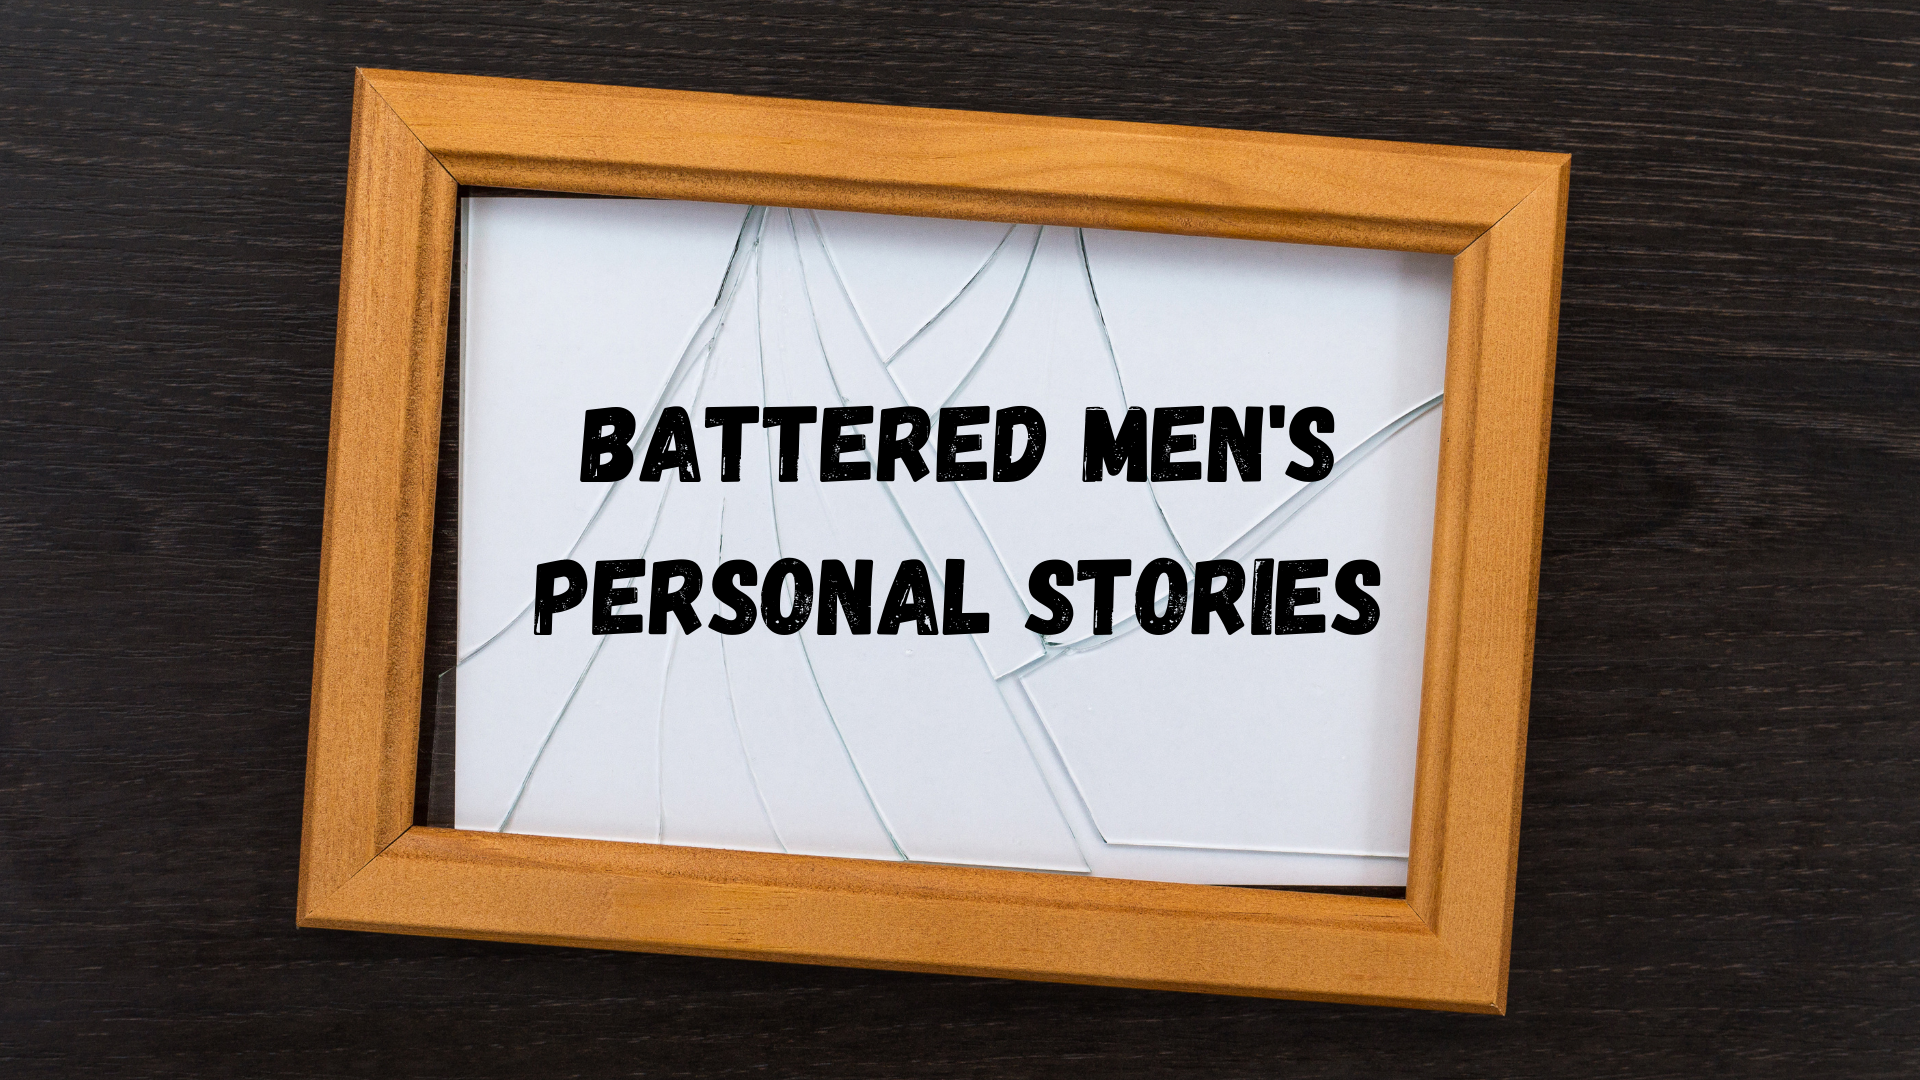 Battered Men's Personal Stories - Adobe Stock